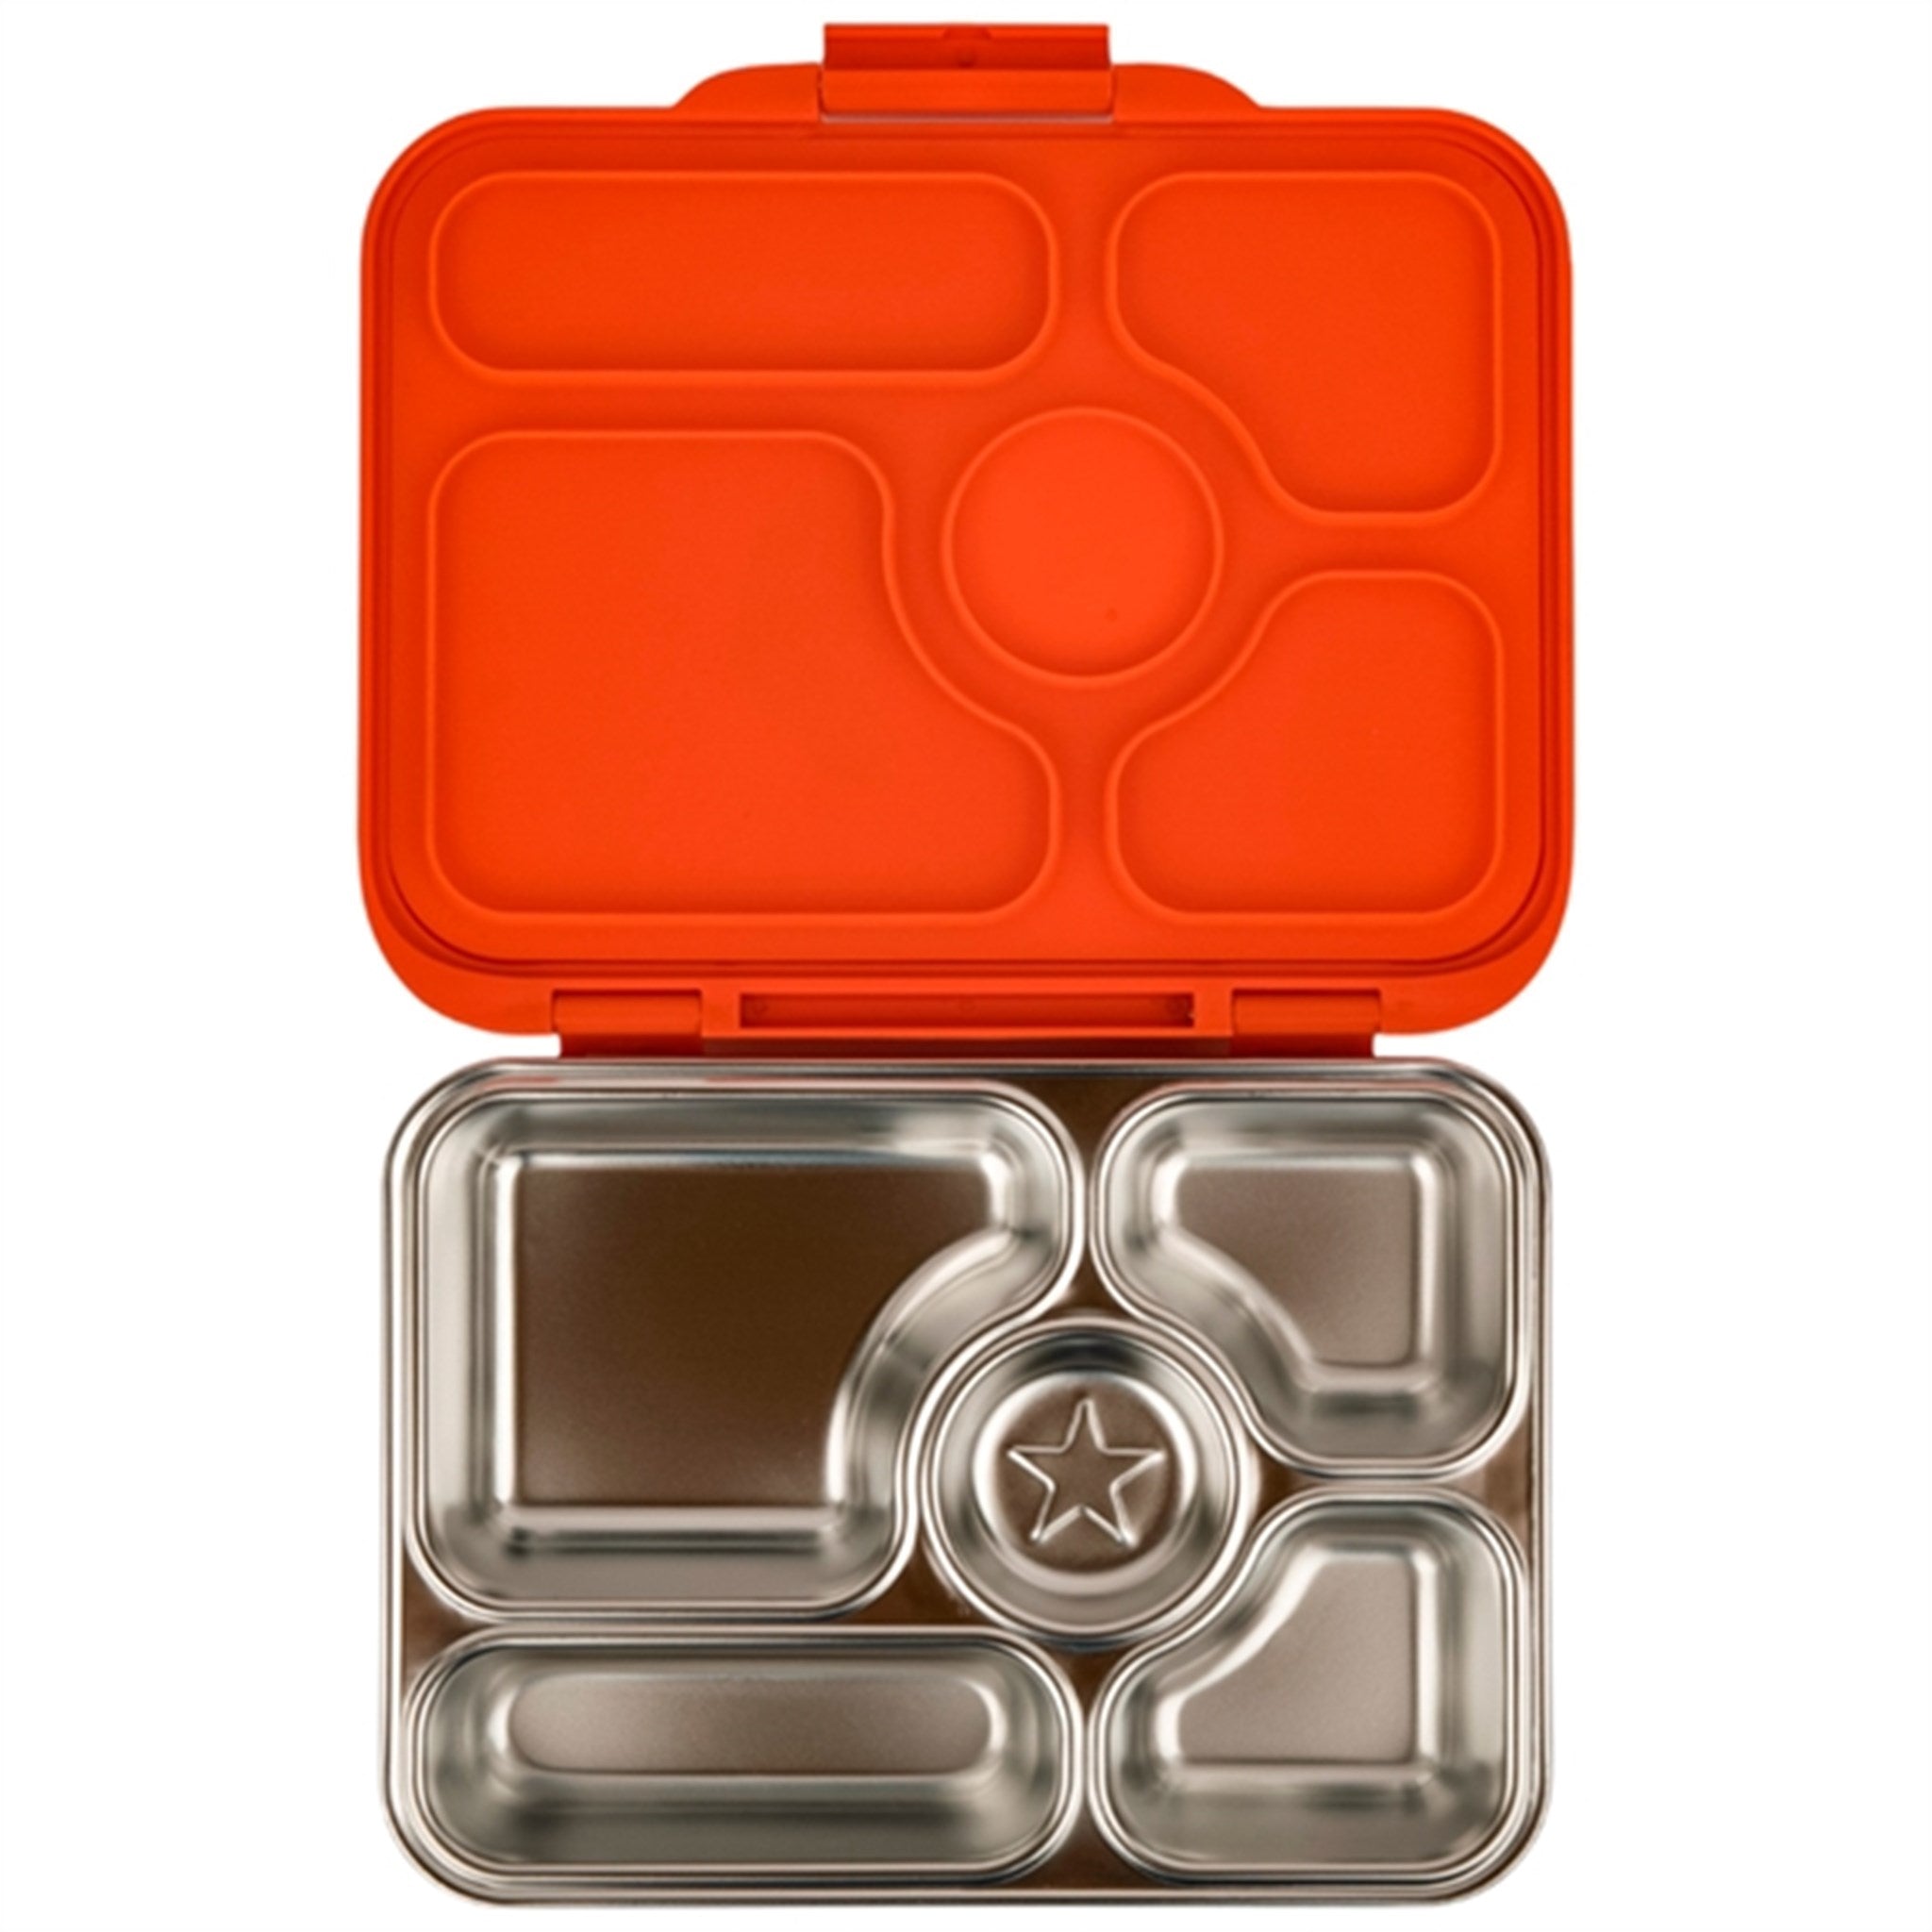 Yumbox Presto Stainless Steel Lunch Box Orange